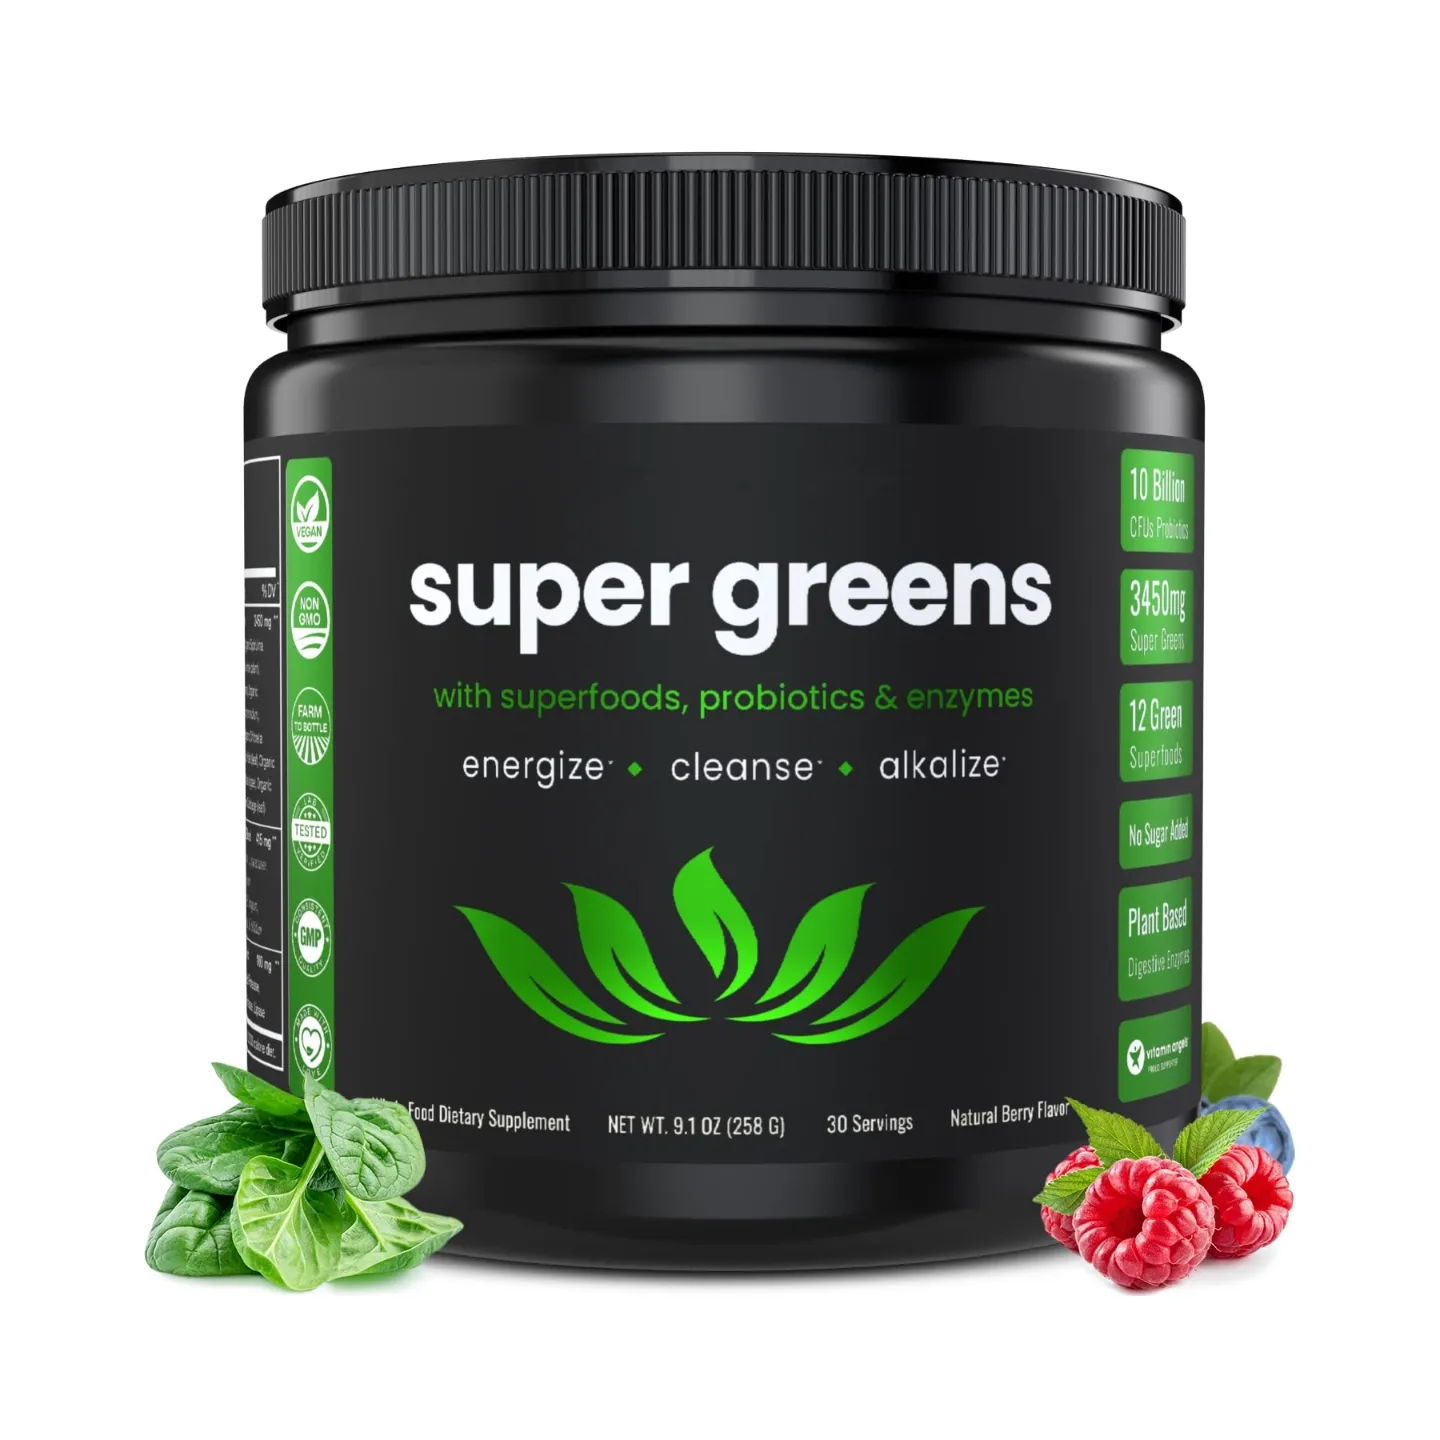 Super green power 20+ organic vegetarian mixed antioxidant clean&green energy support digestive superfood blend